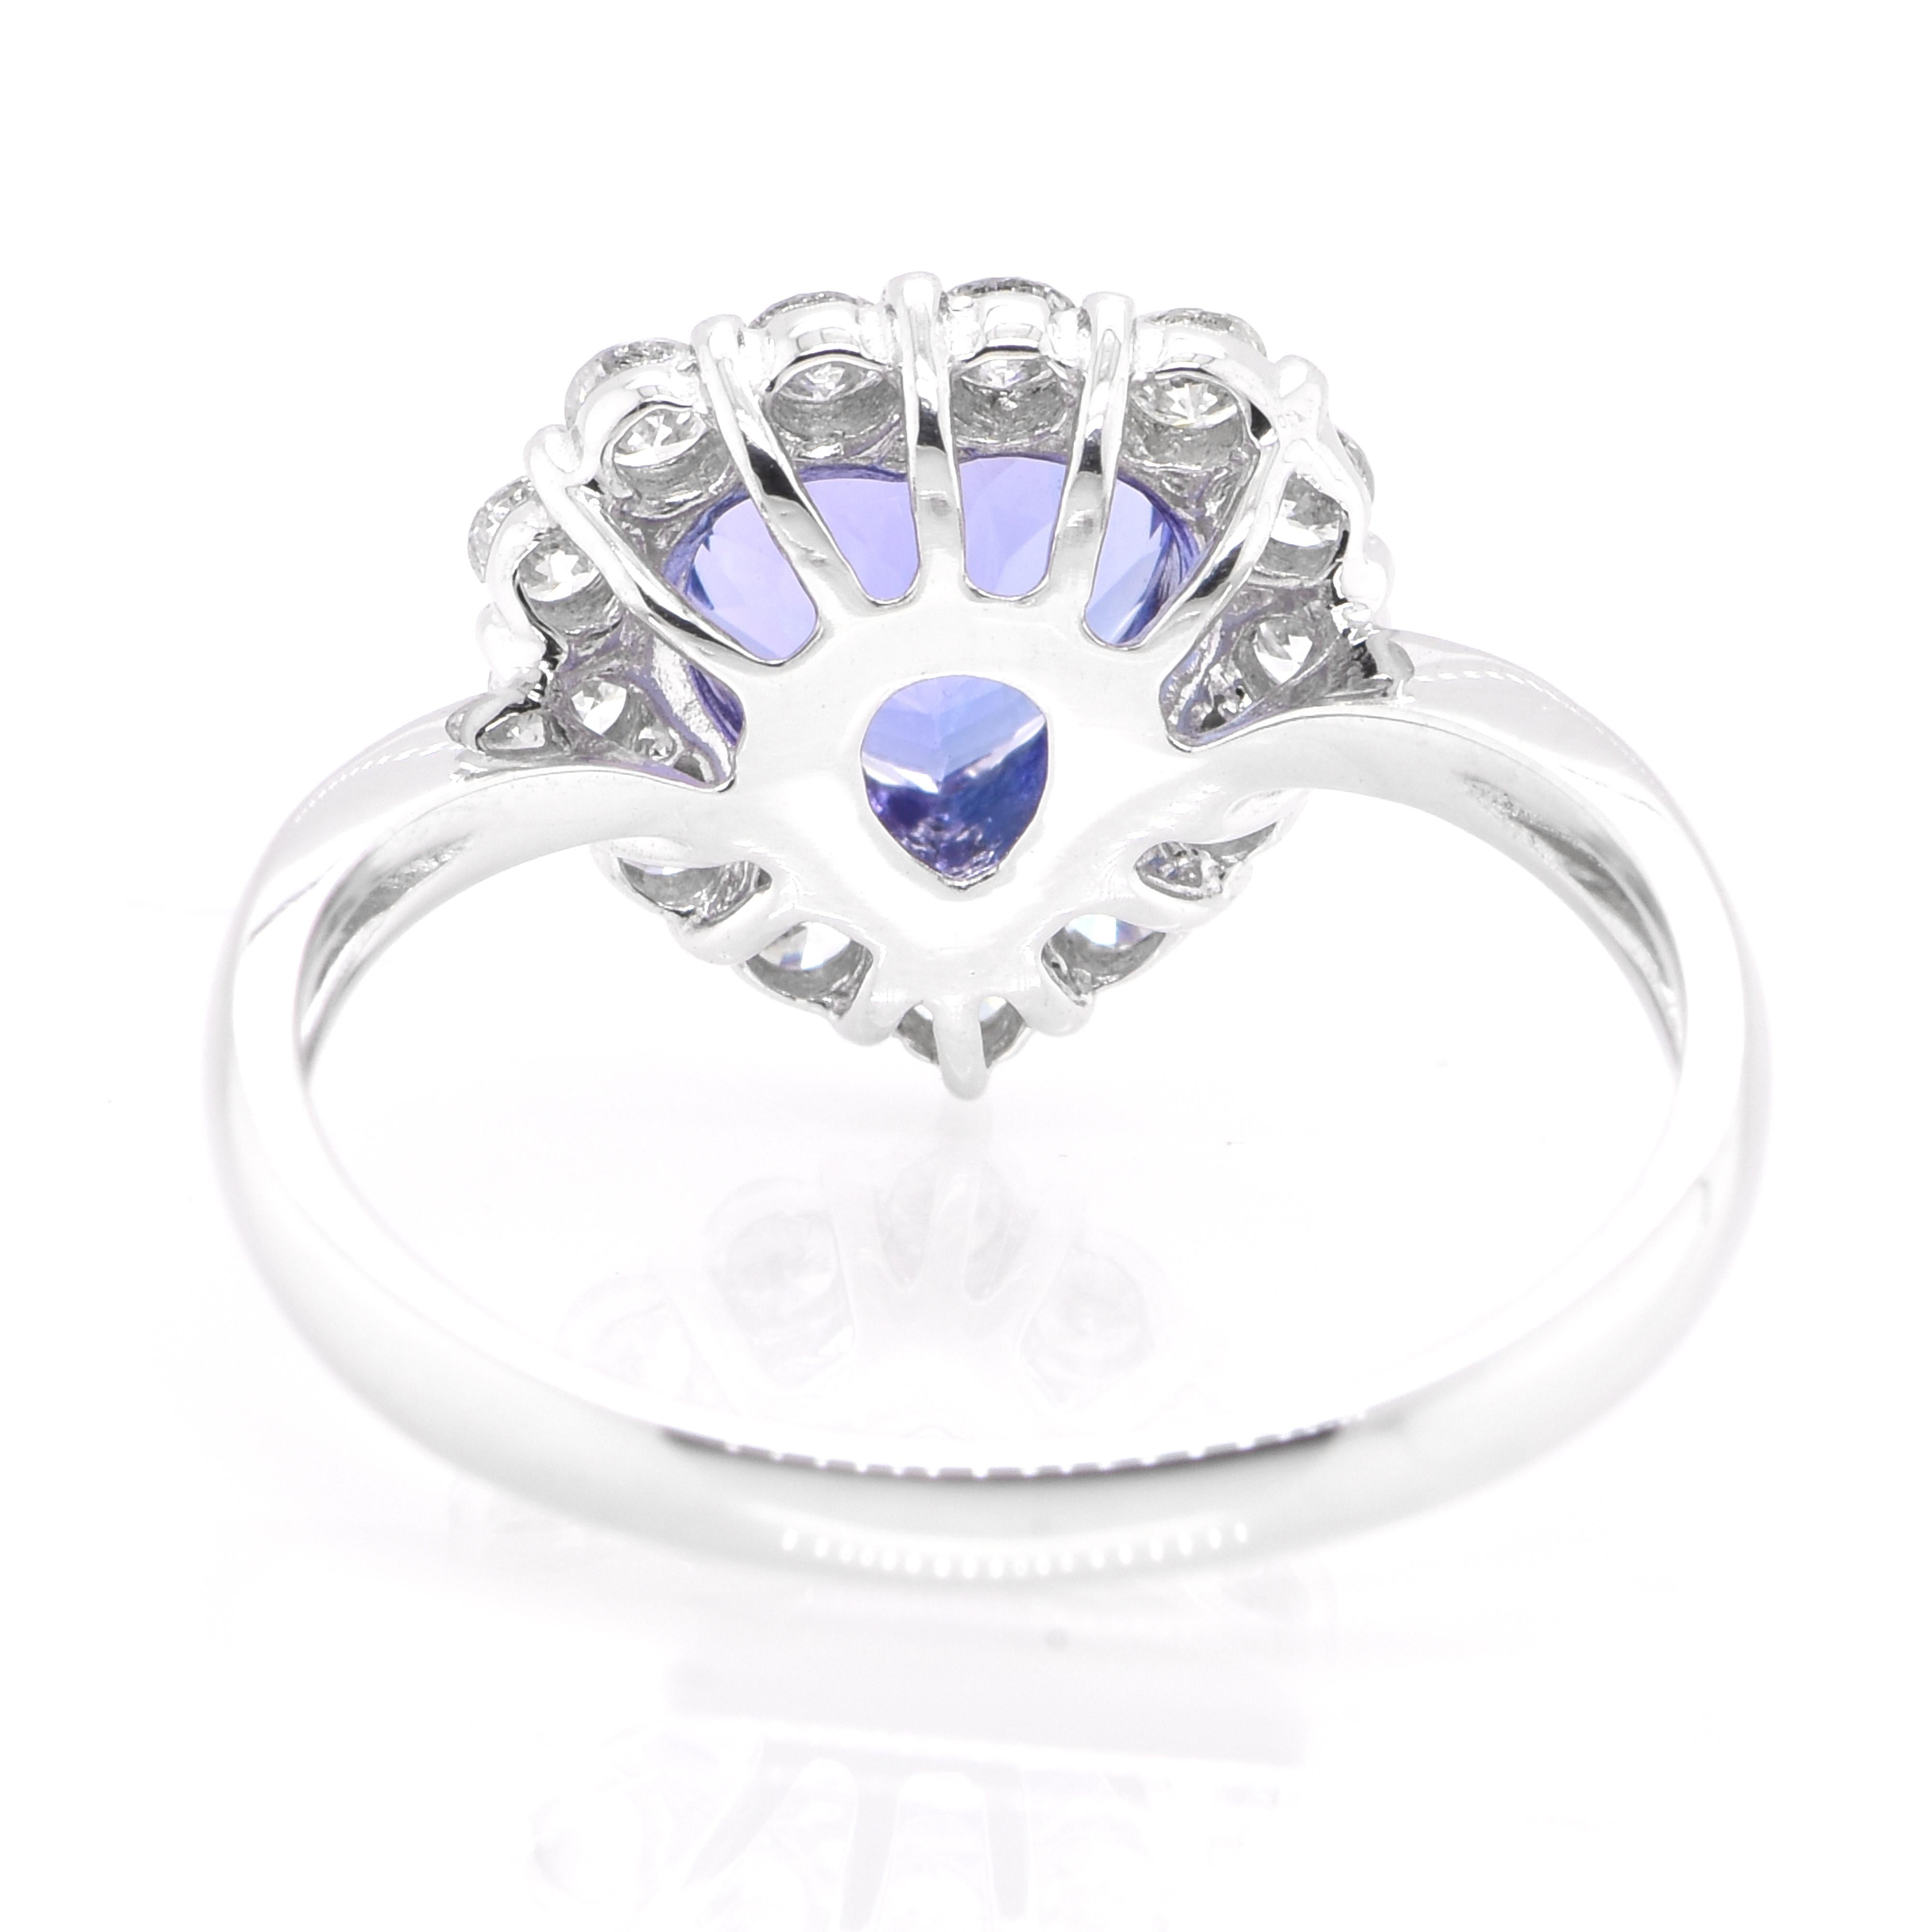 1.18 Carat Natural Heart Cut Tanzanite & Diamond Engagement Ring Set in Platinum 1